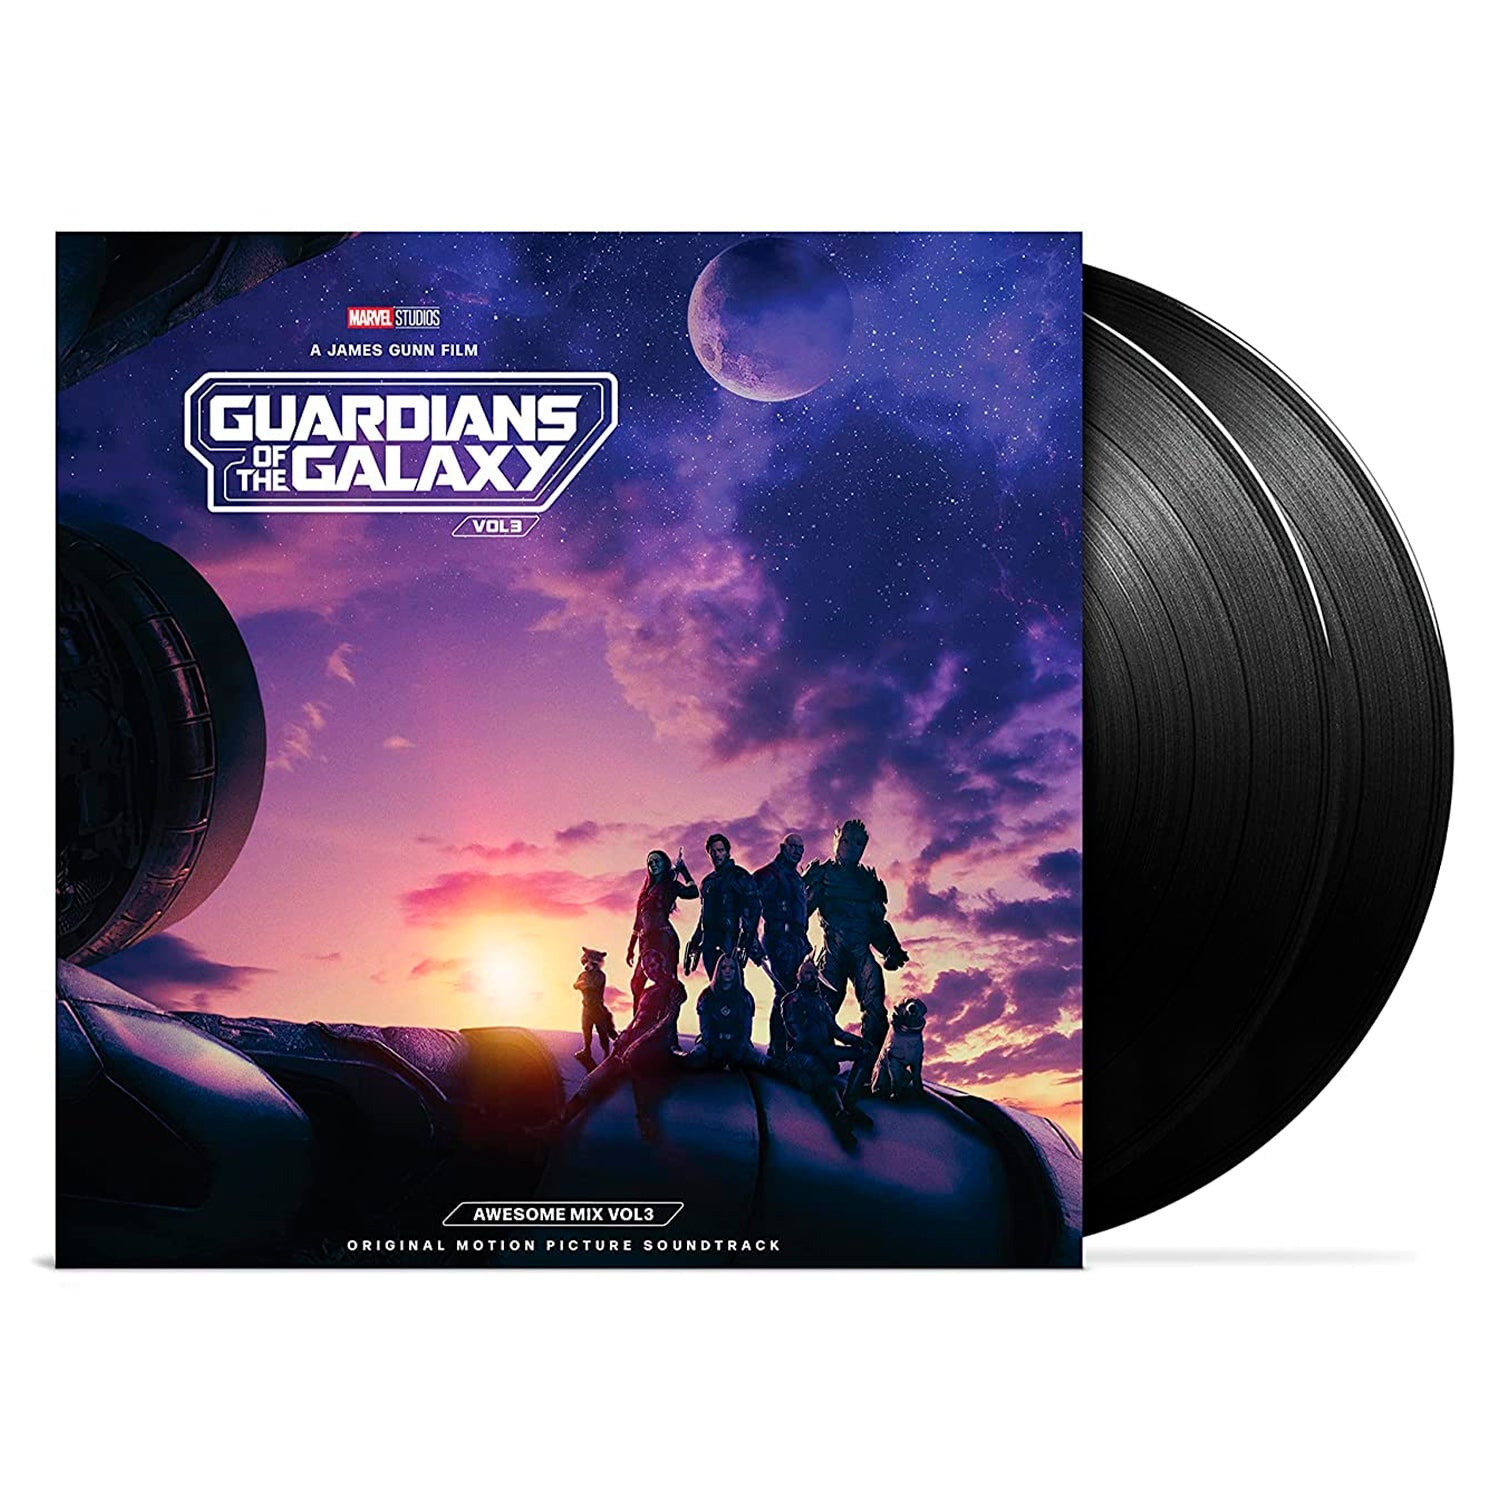 Guardians Of The Galaxy Vol. 3 (Original Motion Picture Soundtrack) Awesome Mix Vol. 3 (Vinyl 2 LP)